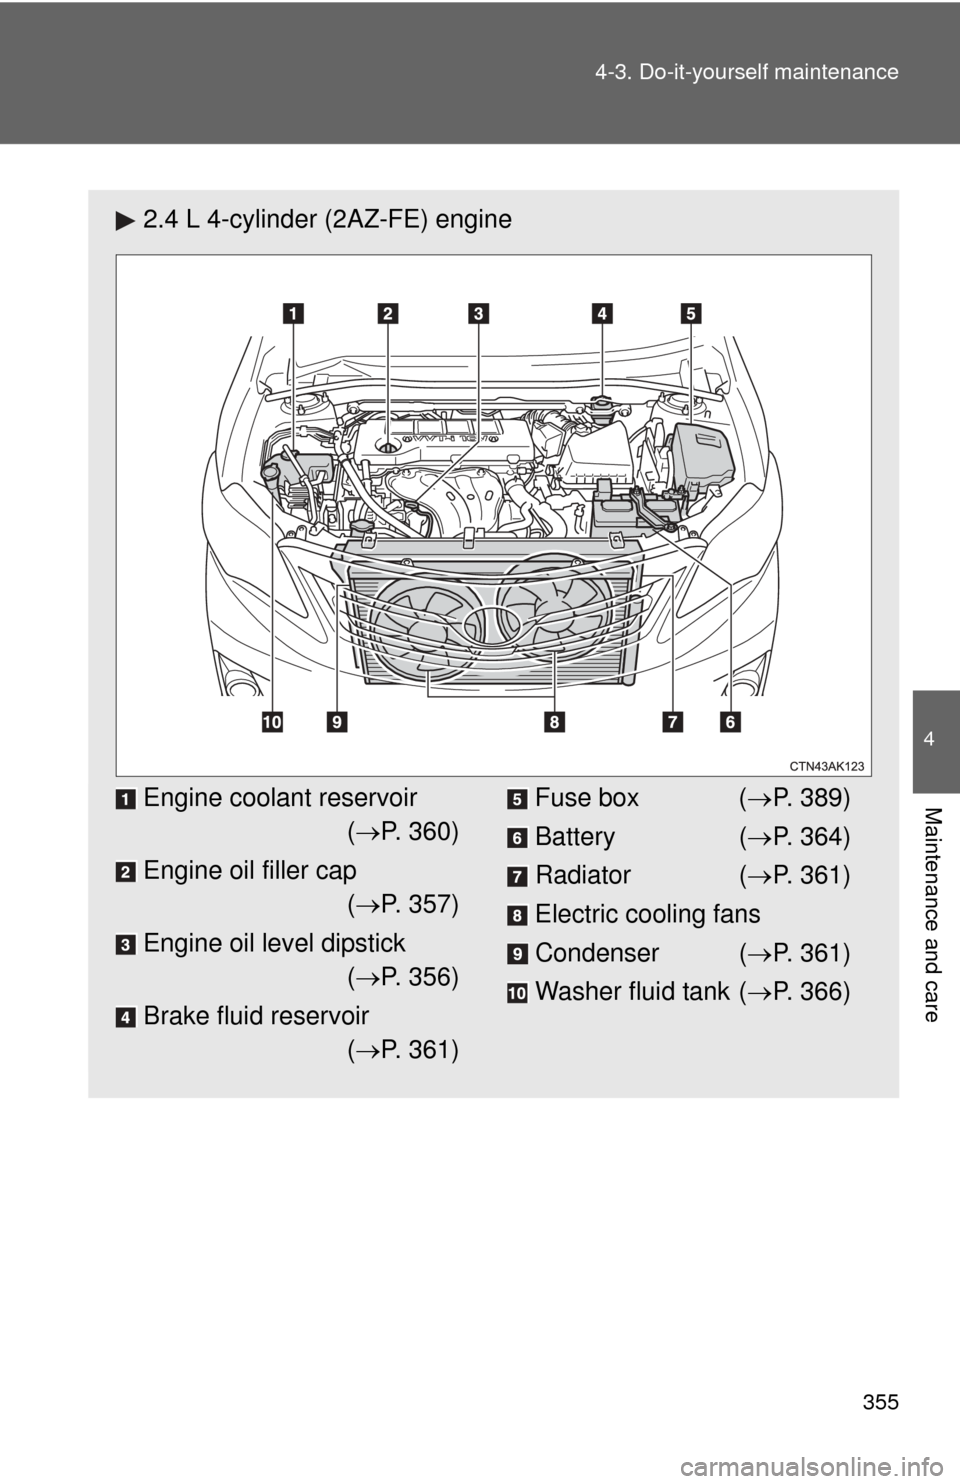 TOYOTA COROLLA 2012 10.G User Guide 355
4-3. Do-it-yourself maintenance
4
Maintenance and care
2.4 L 4-cylinder (2AZ-FE) engine
Engine coolant reservoir
( P. 360)
Engine oil filler cap ( P. 357)
Engine oil level dipstick ( P. 3